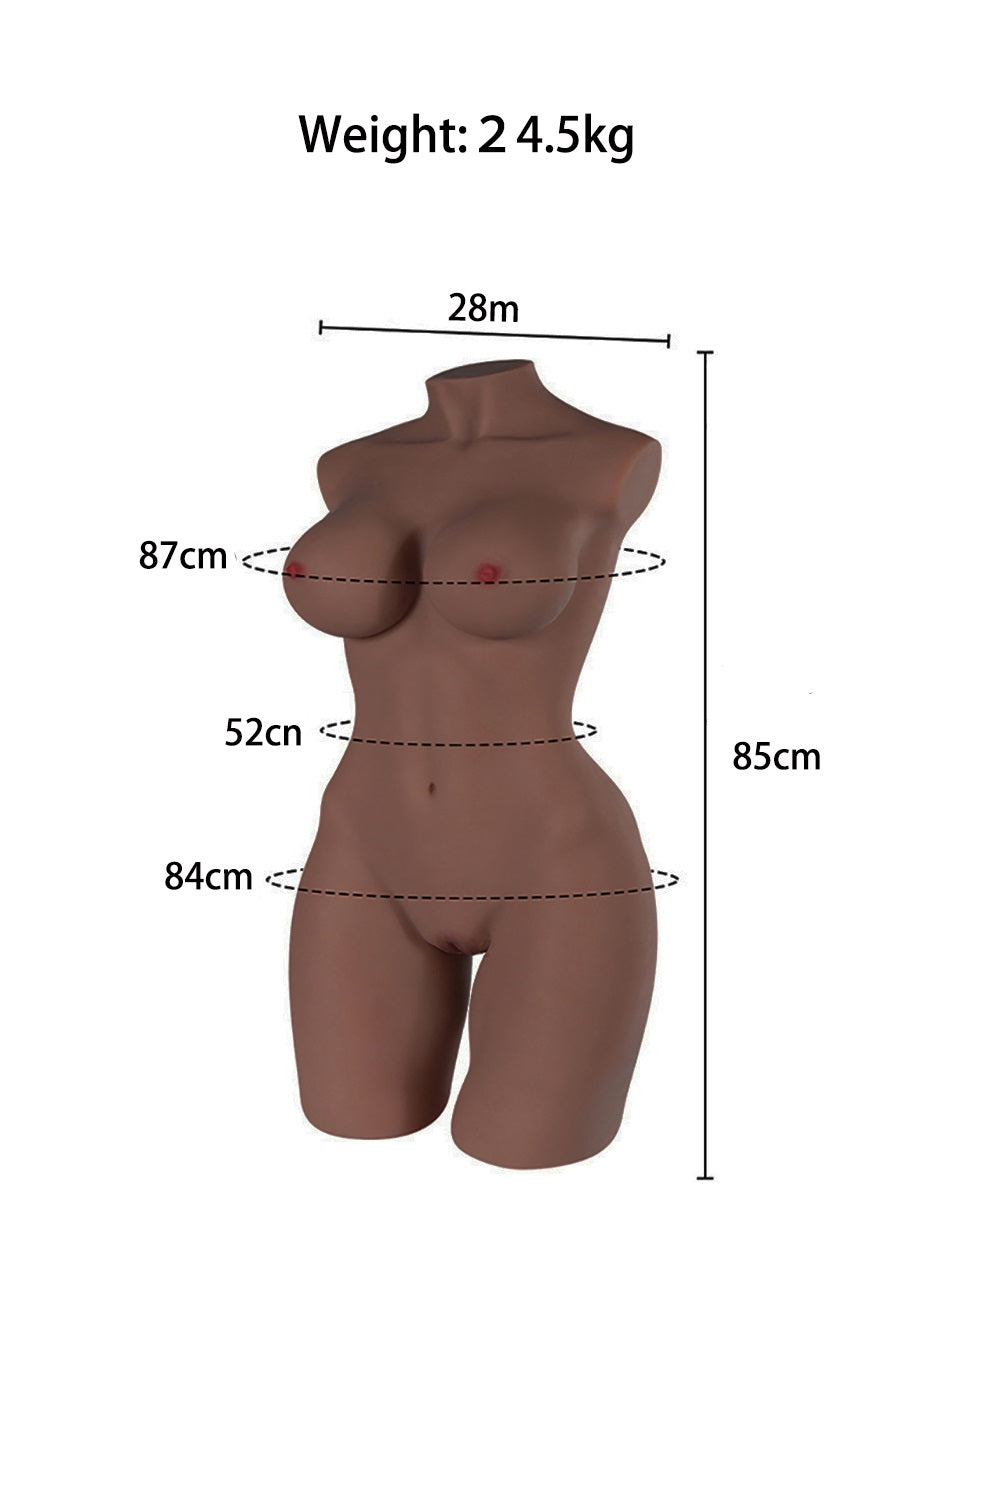 EU Stock - 85cm/33.5in Realistic Torso Sex Doll Brown Skin 24.5kg/54lbs Half Body Adult Love Doll Torso